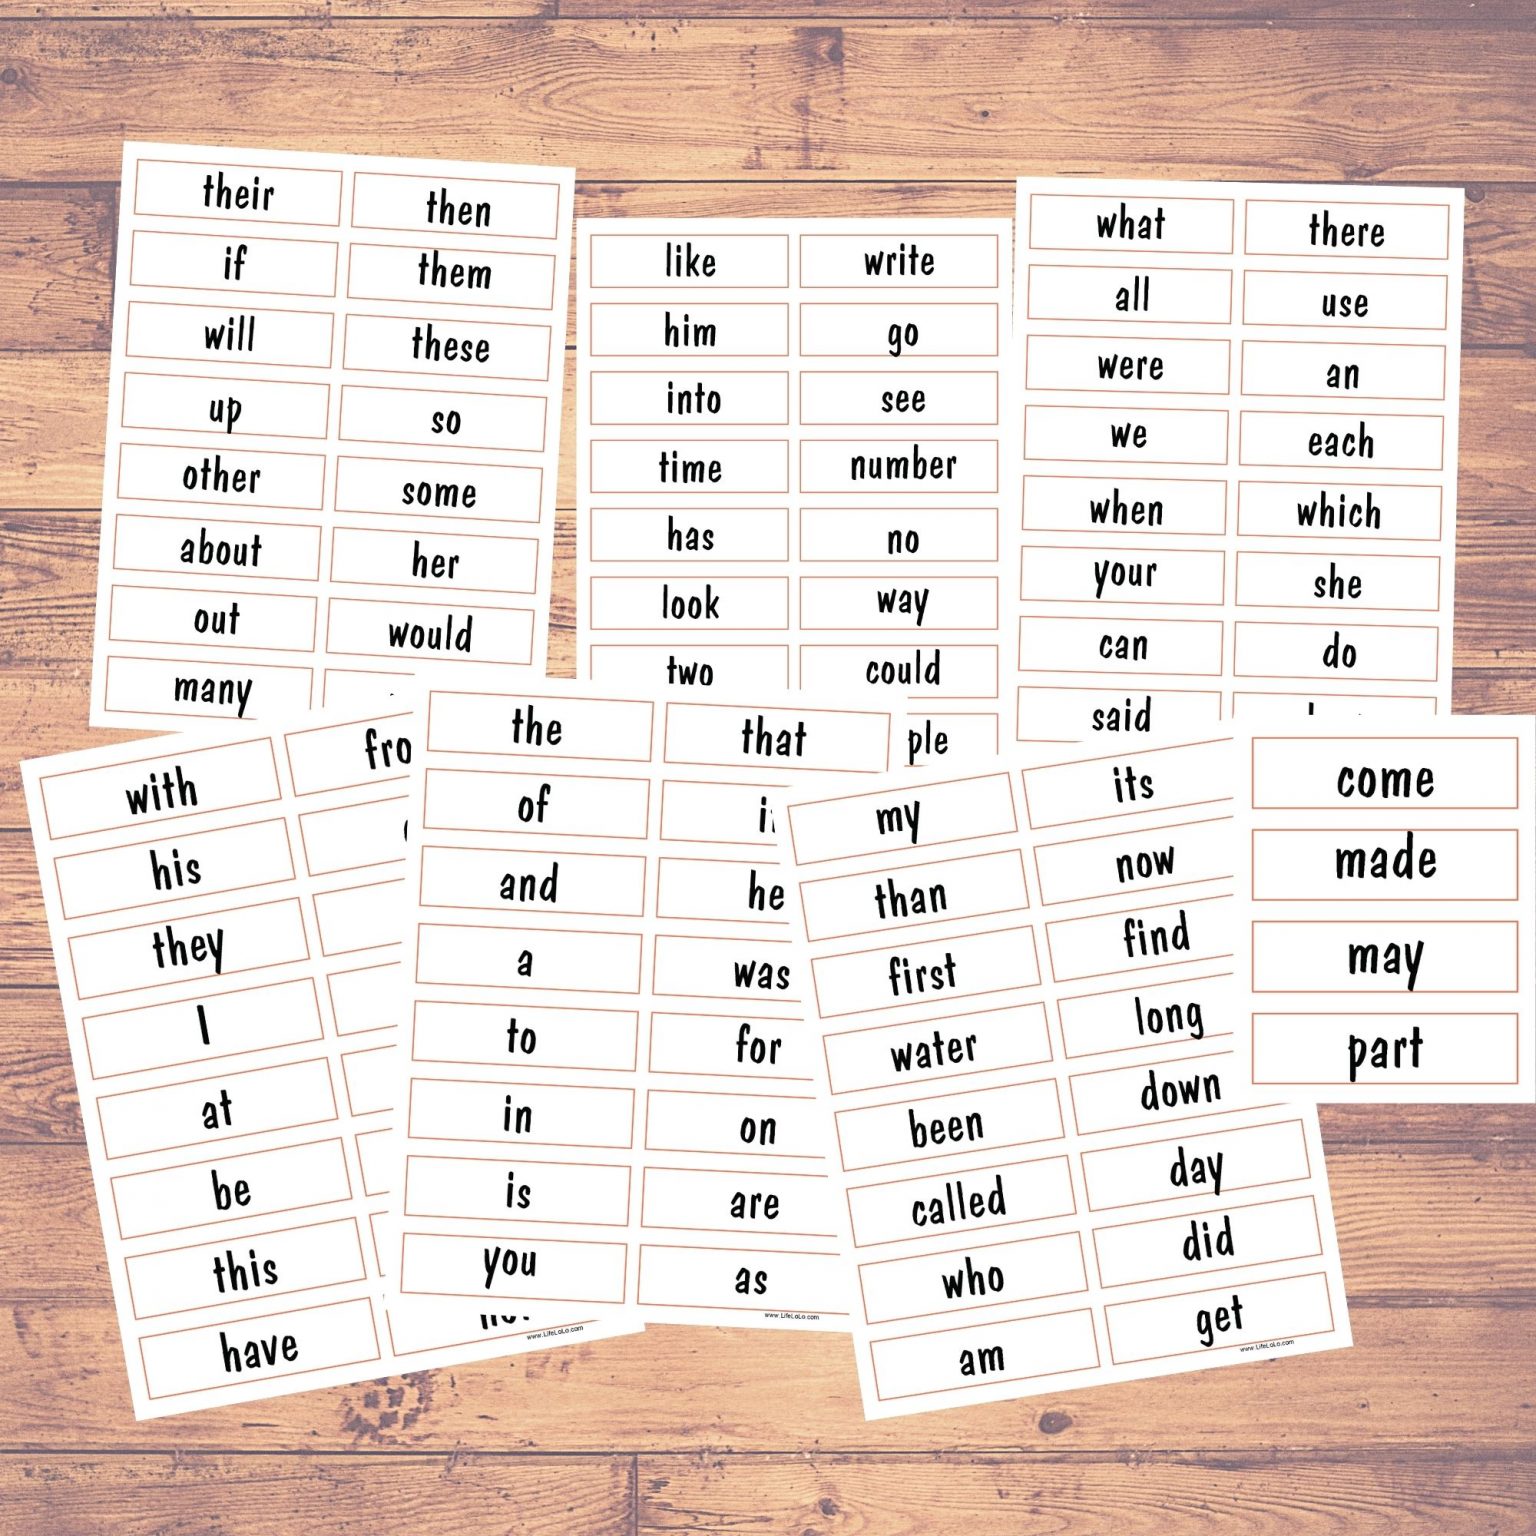 100-fry-sight-words-builder-game-language-writing-skills